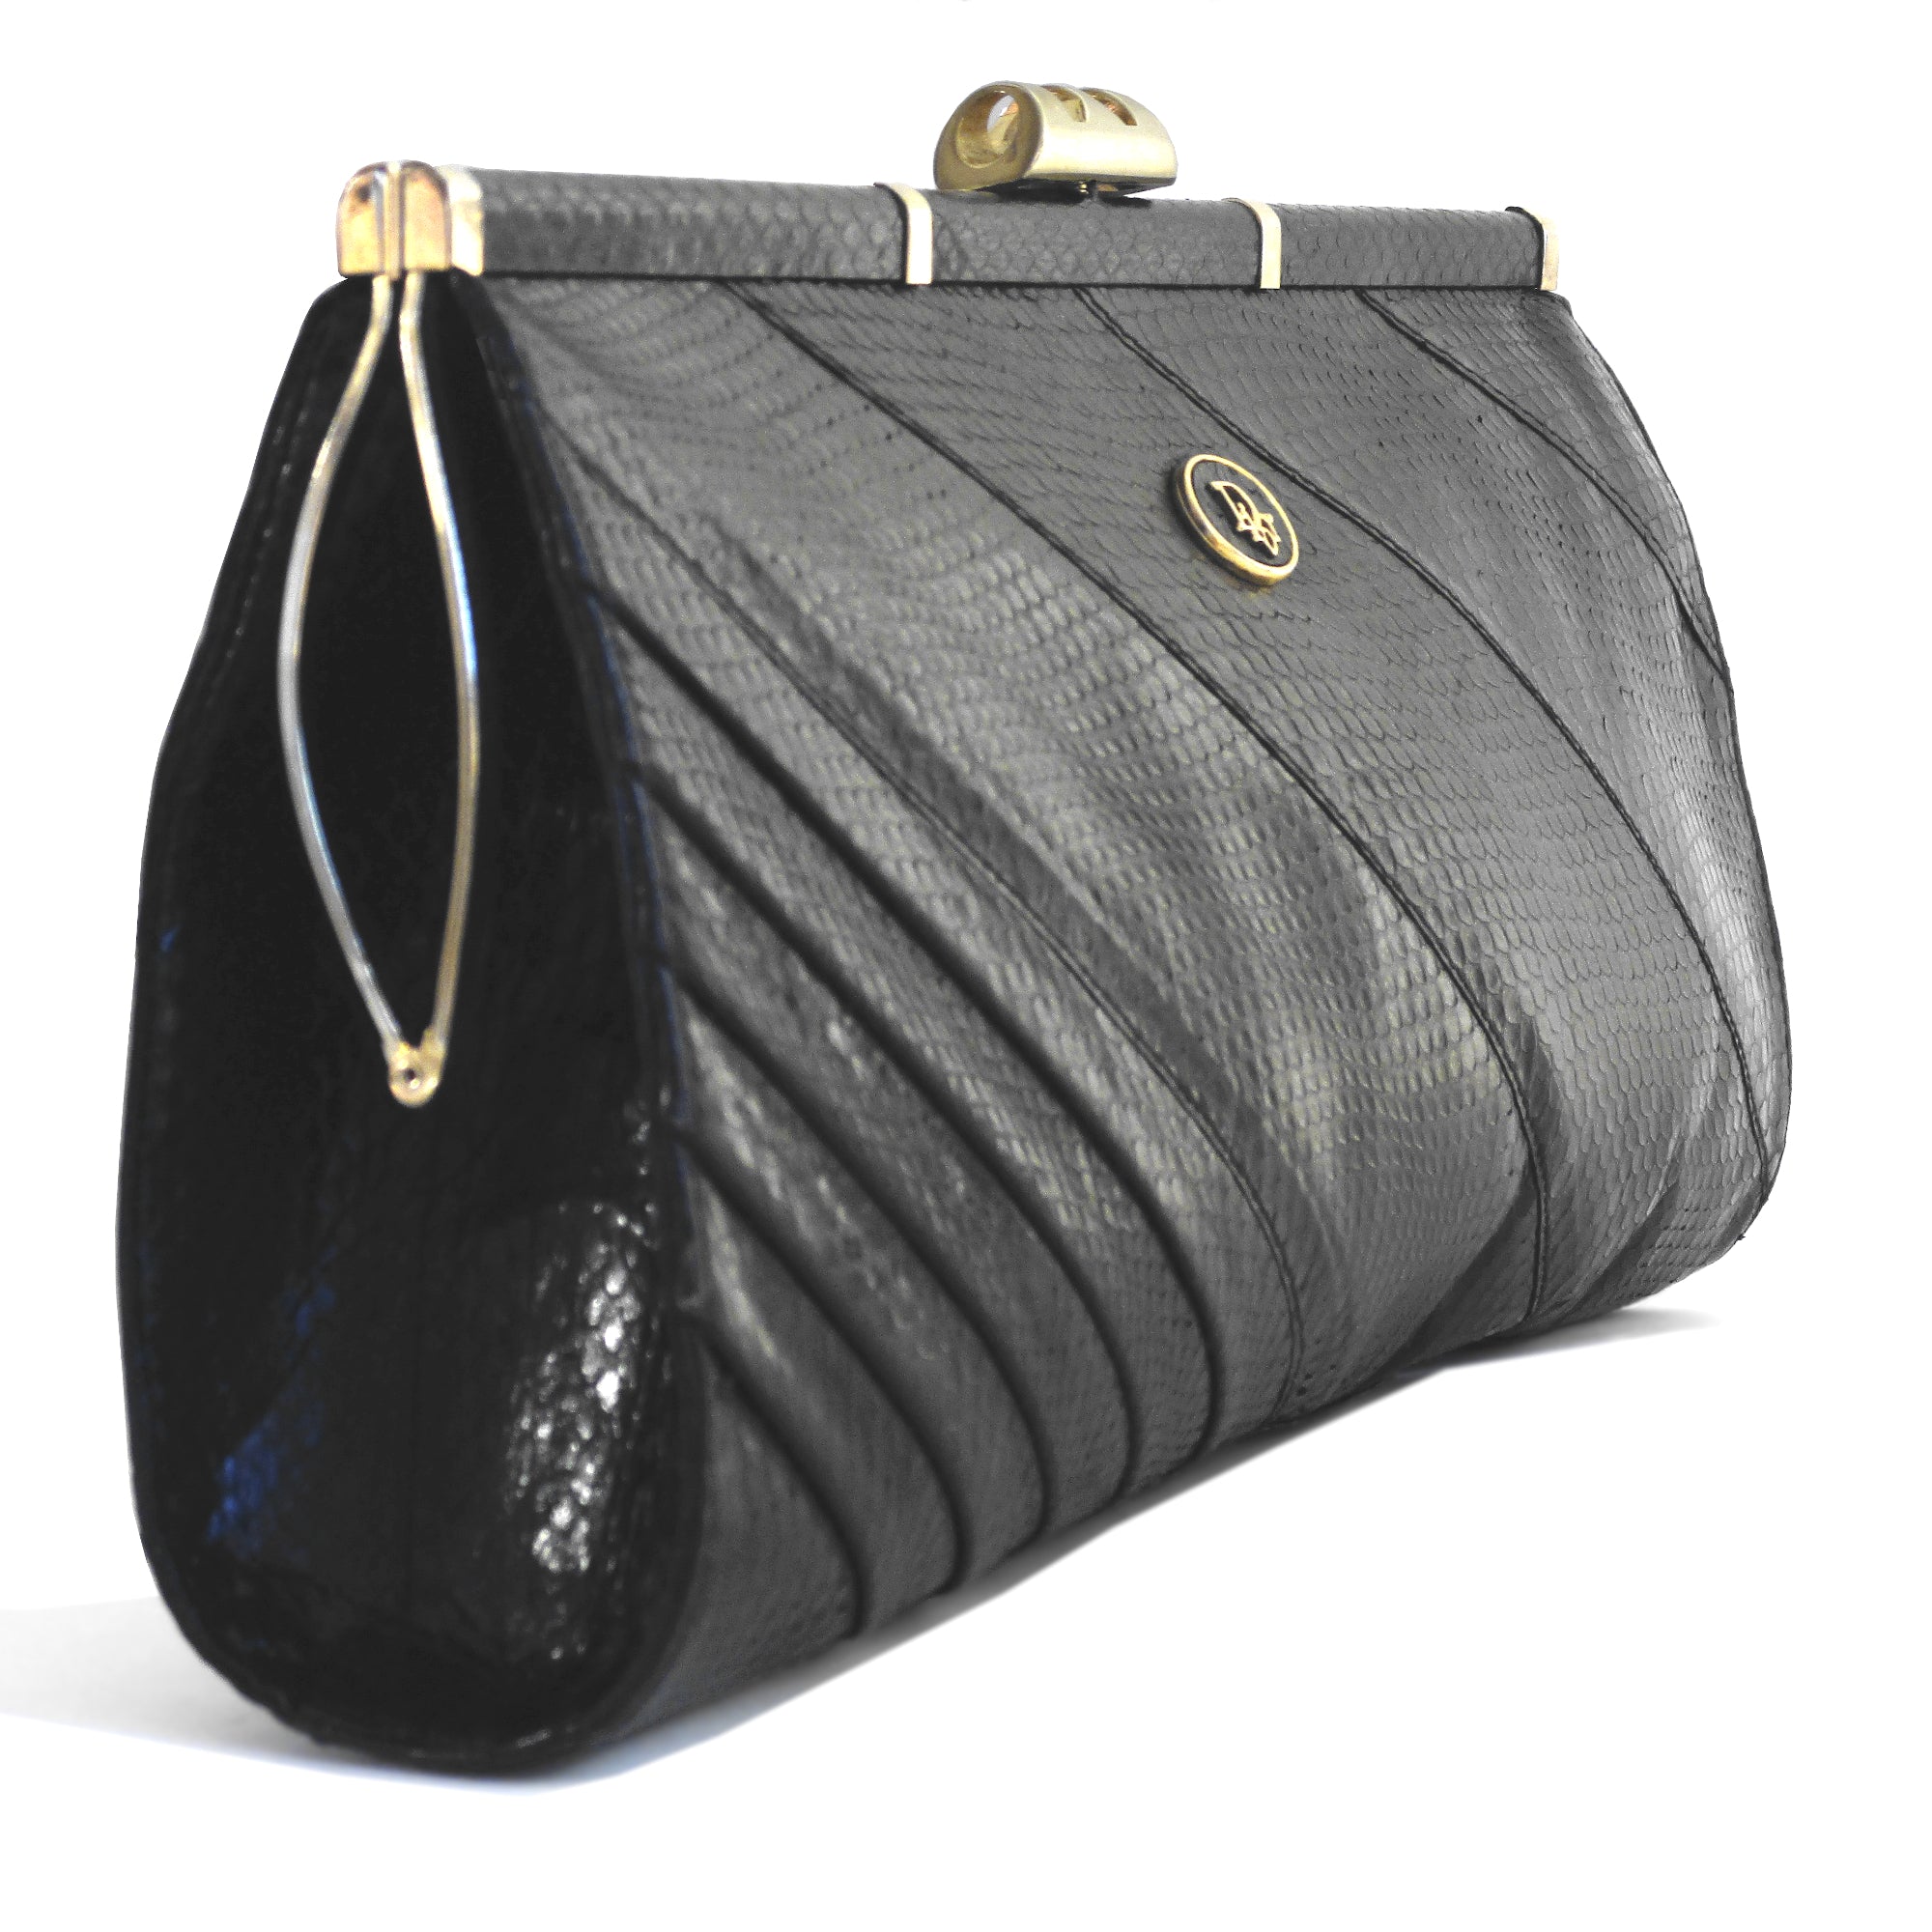 DIOR Crossbody Black Purse Evening Bag Clutch cosmetic beauty pouch | eBay